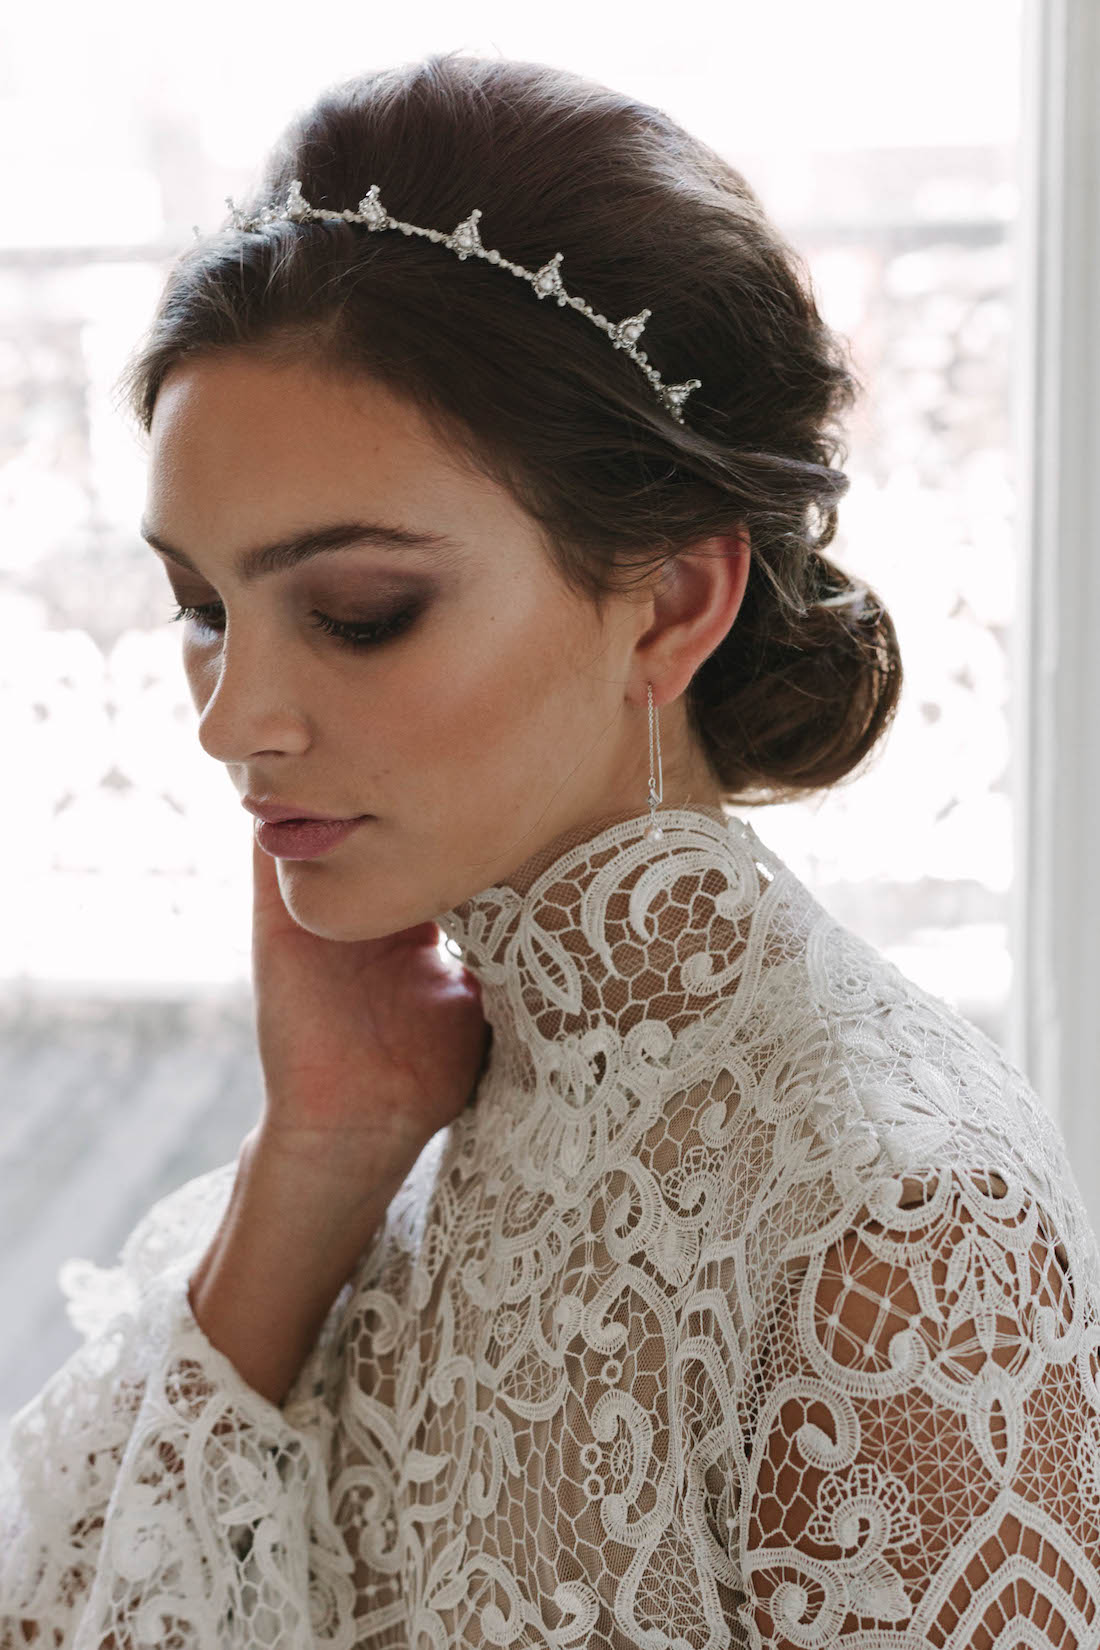 https://www.taniamaras.com/wp-content/uploads/2016/01/How-to-accessorise-a-lace-wedding-dress-12.jpg